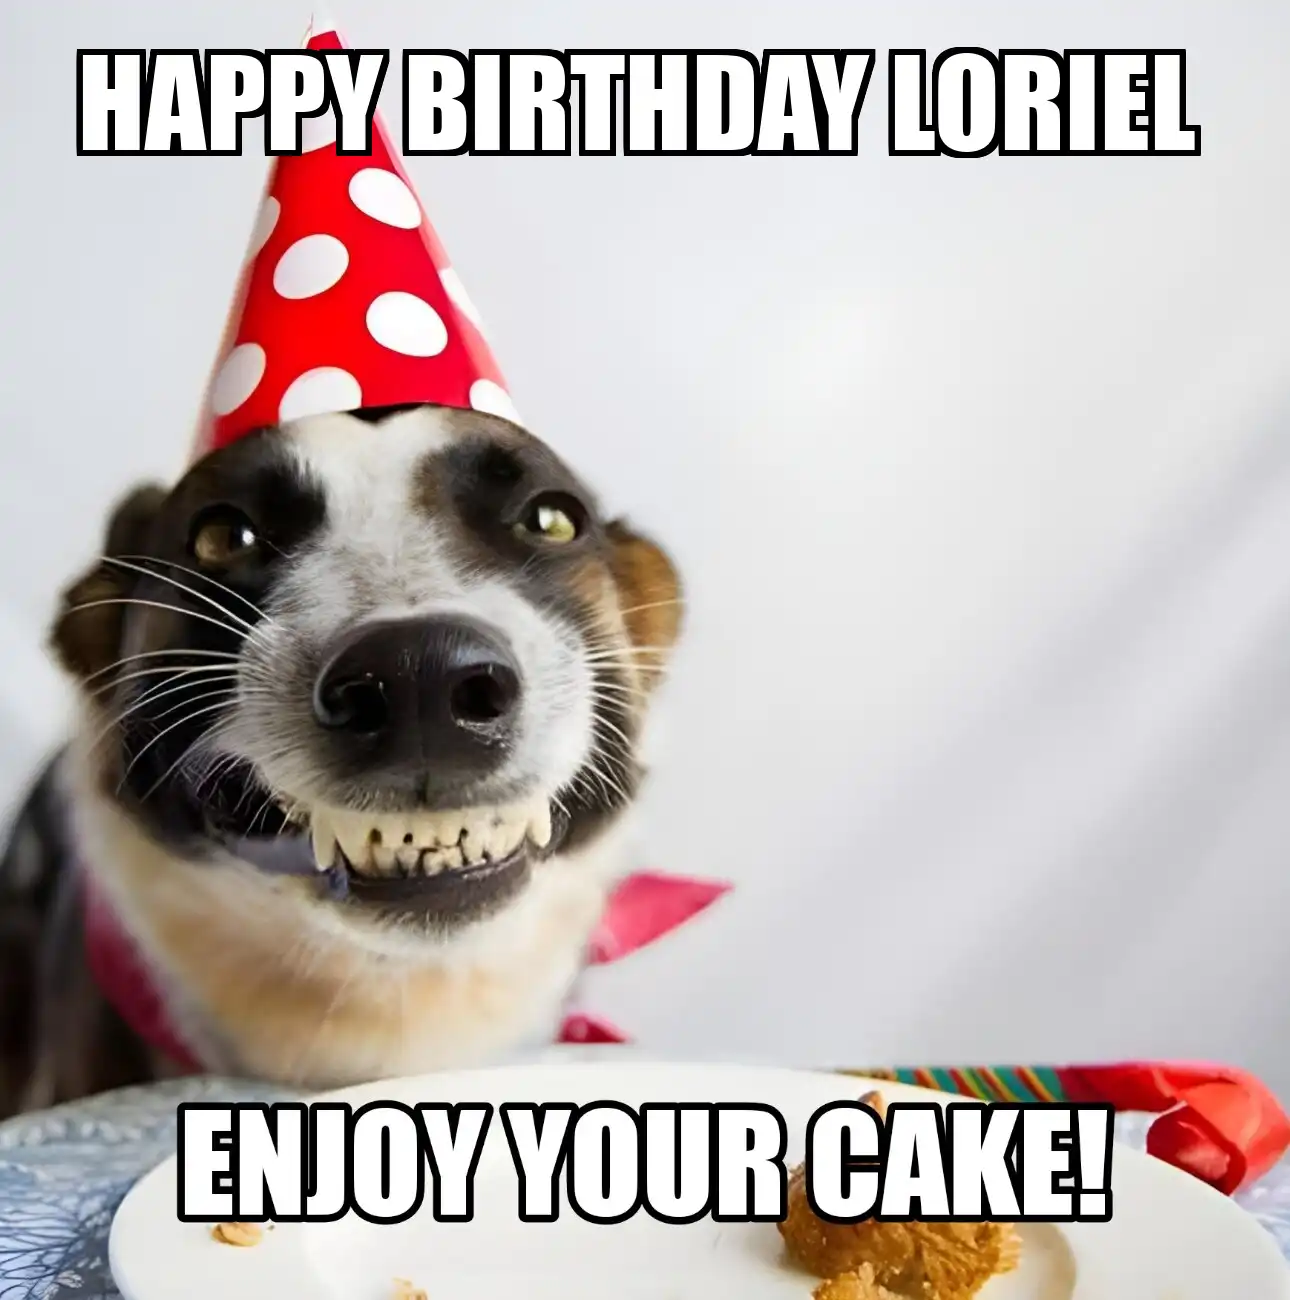 Happy Birthday Loriel Enjoy Your Cake Dog Meme